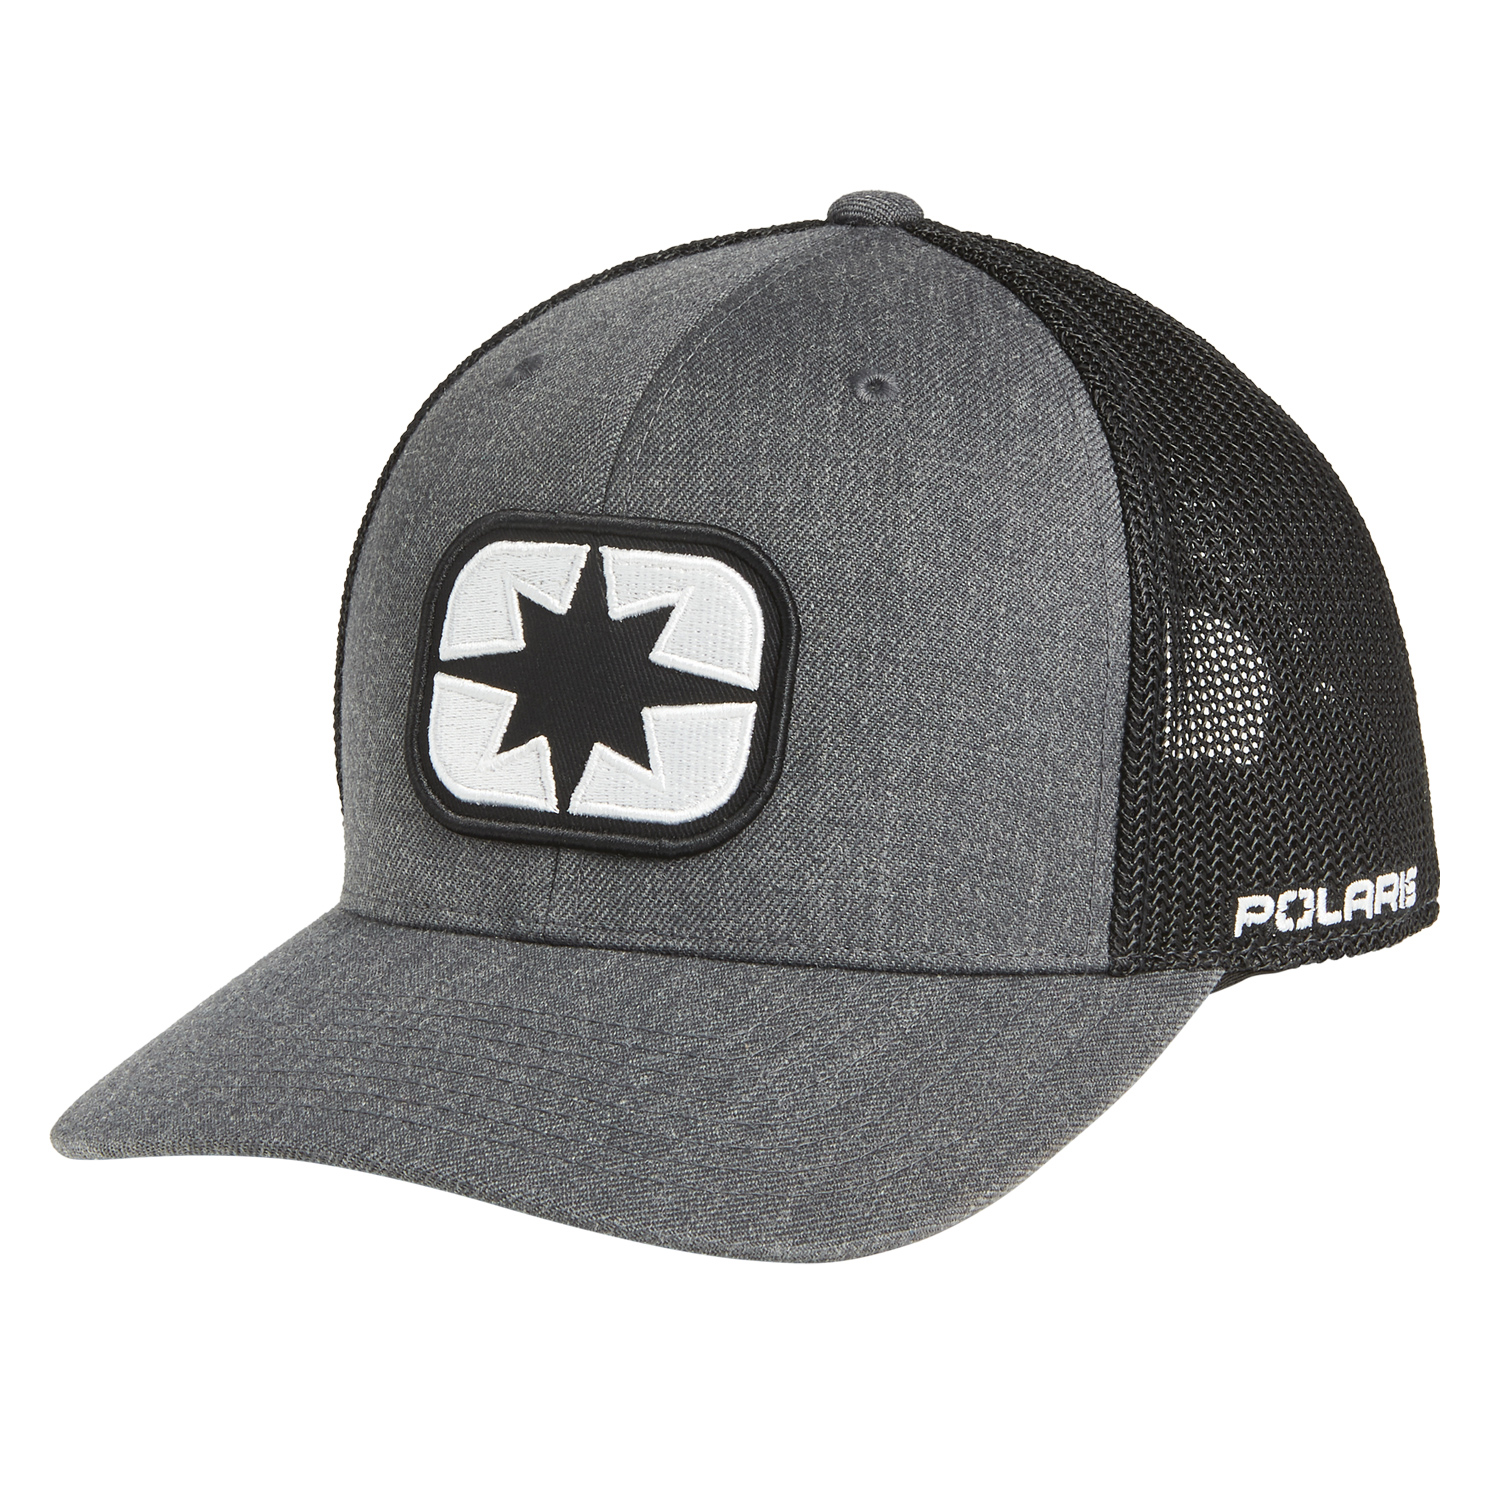 Ellipse Patch Trucker Hat | Polaris Snowmobiles